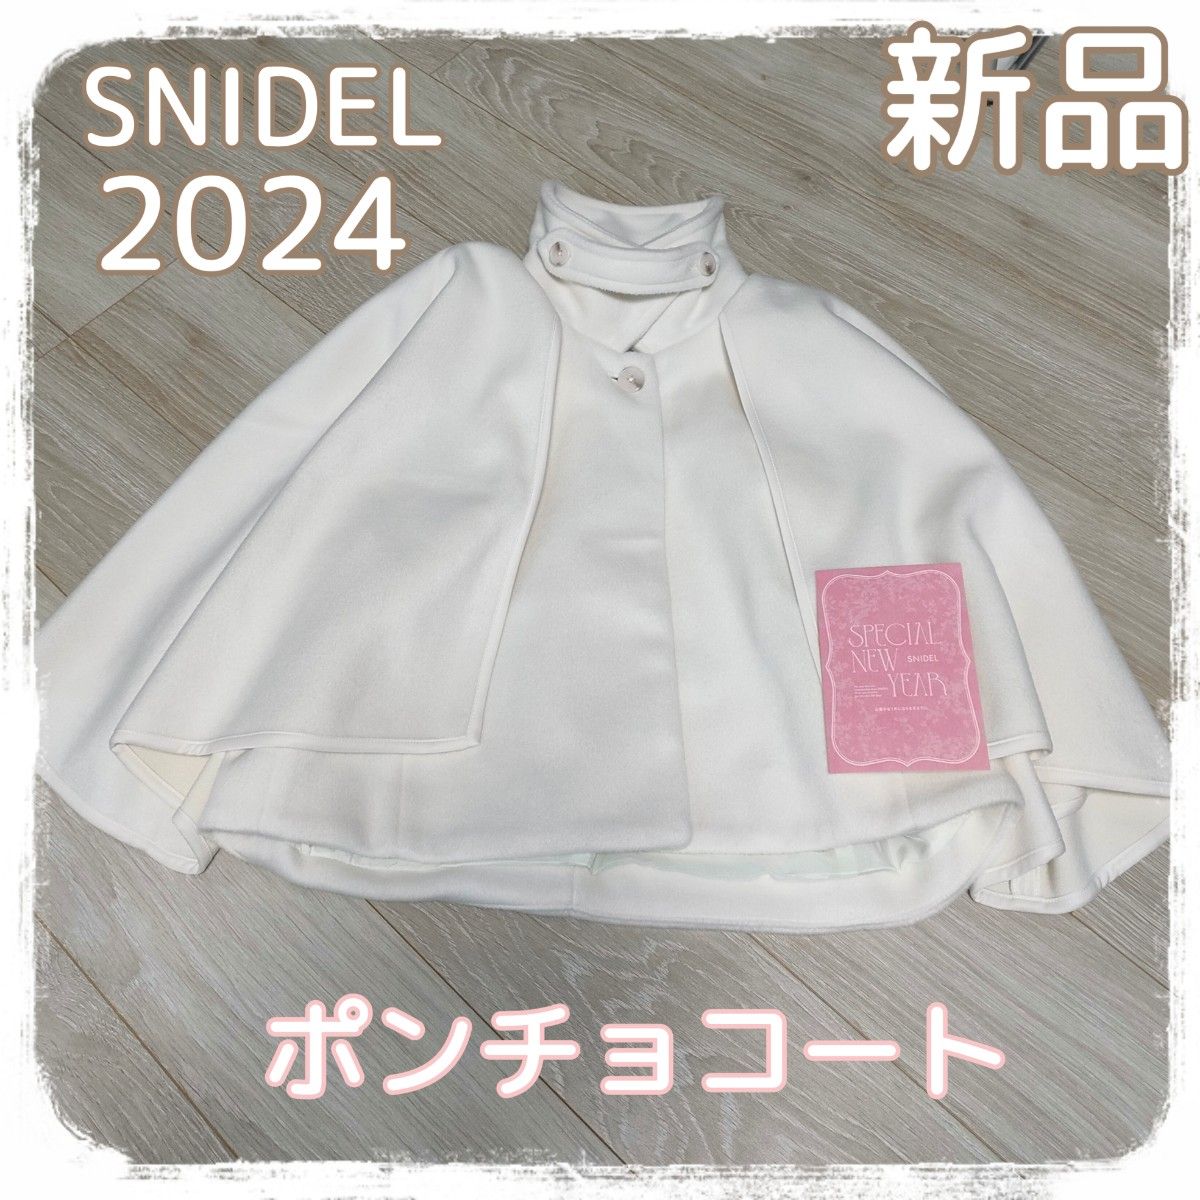 Snidel スナイデル 2024 福袋 ケープコート ポンチョ アウター 新品